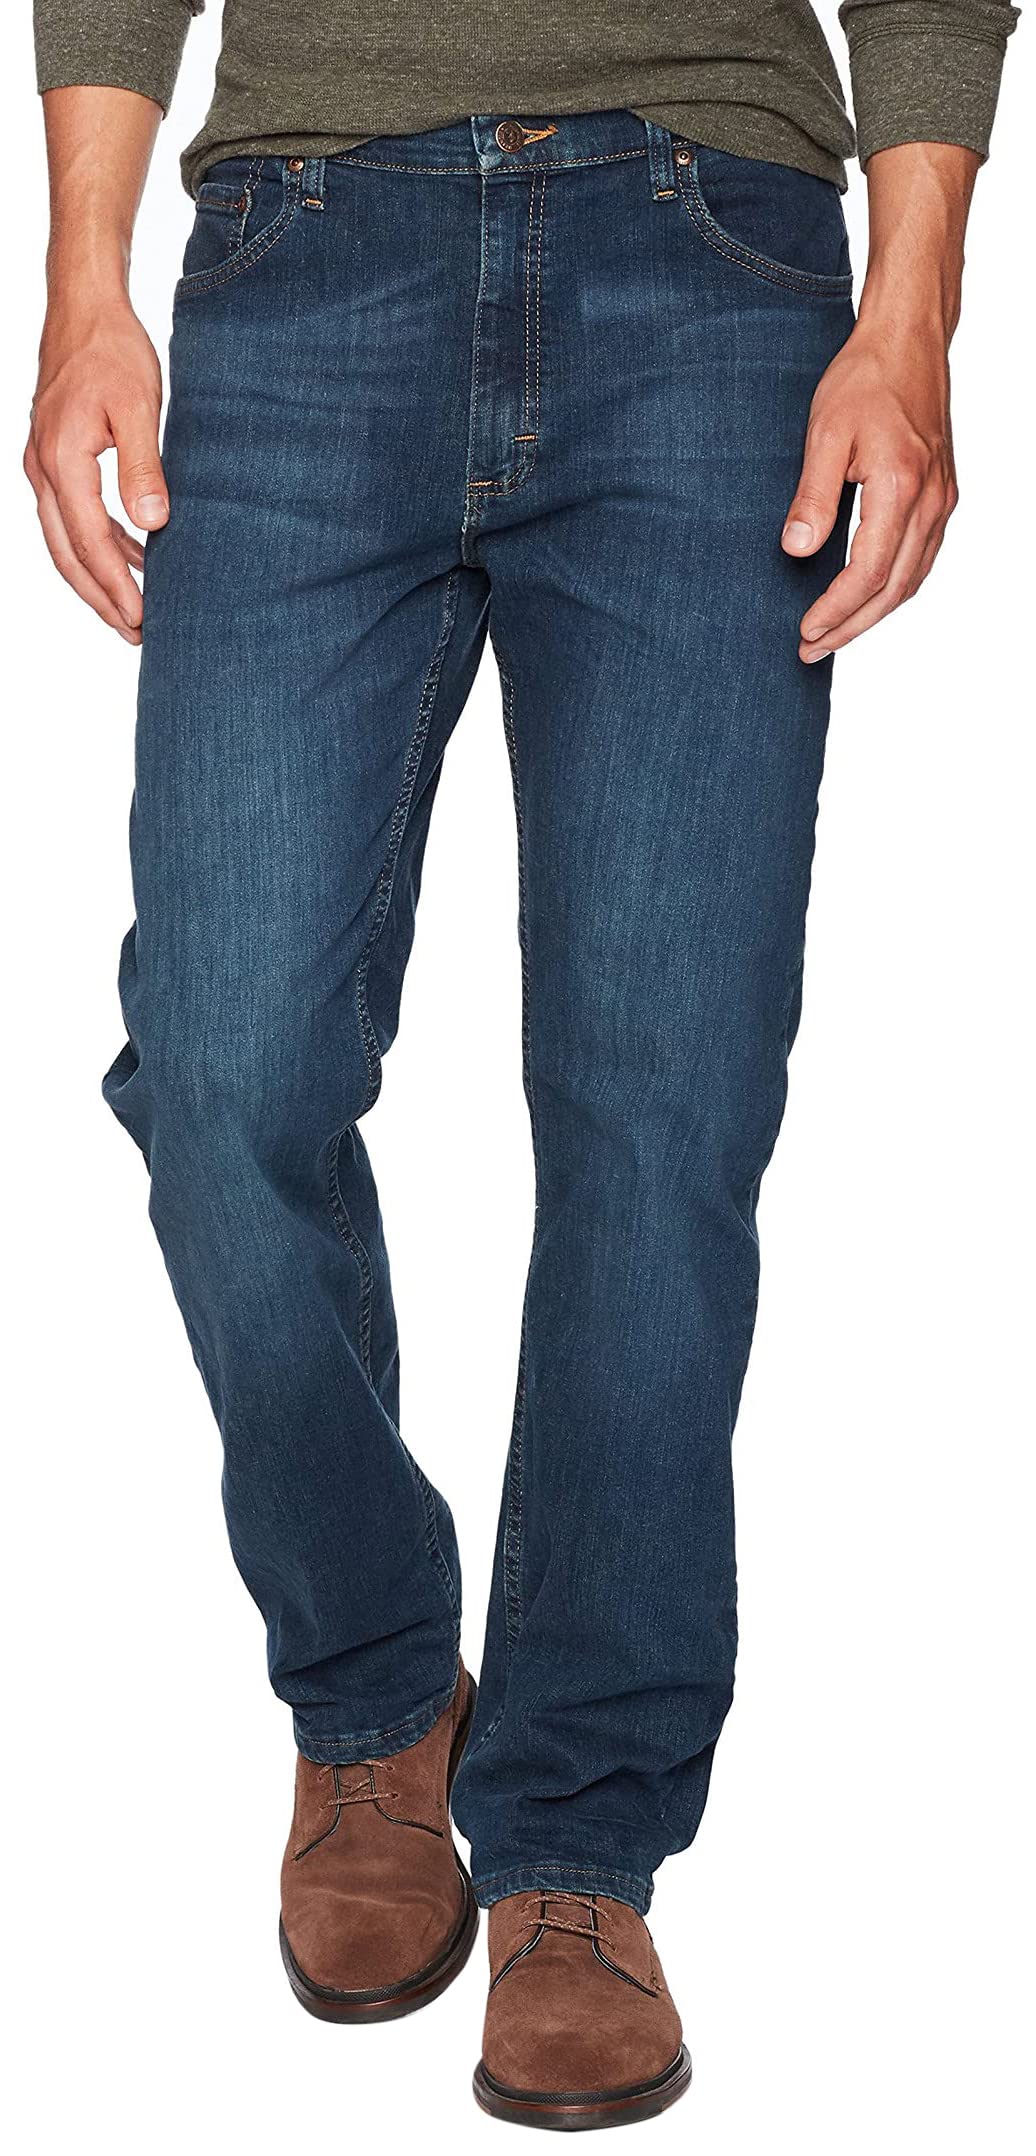 Wrangler Authentics Men's Classic 5-Pocket Regular Fit Jean, Twilight Flex, 30W x 29L